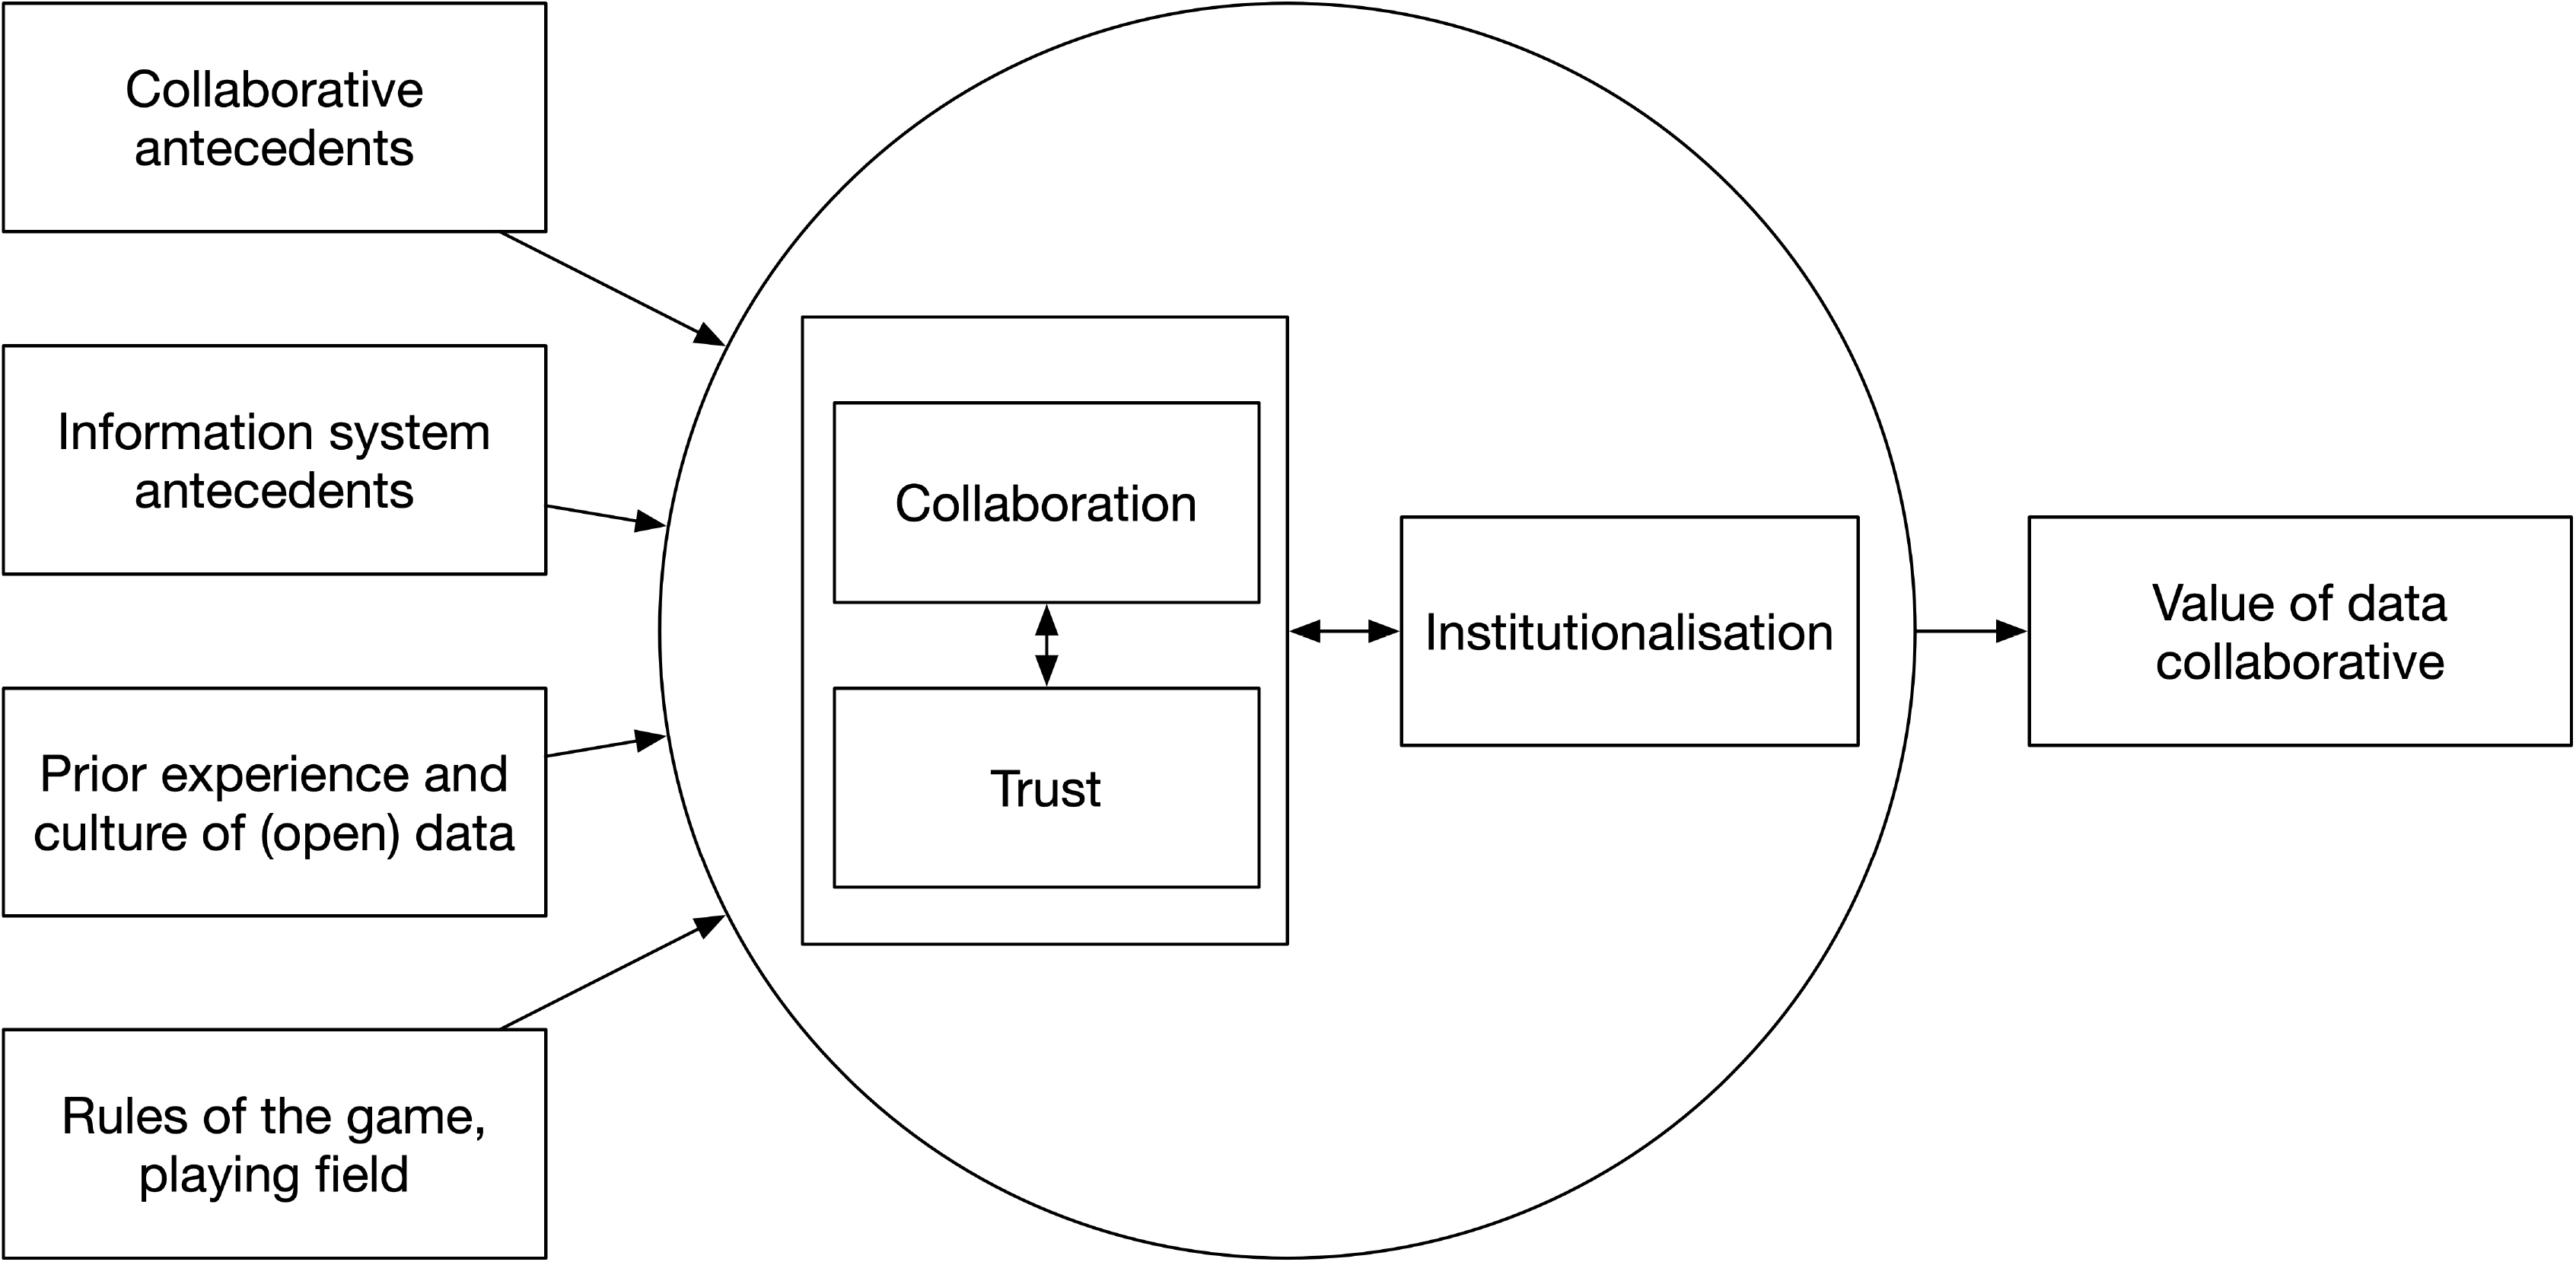 Conceptual model for data collaboratives.